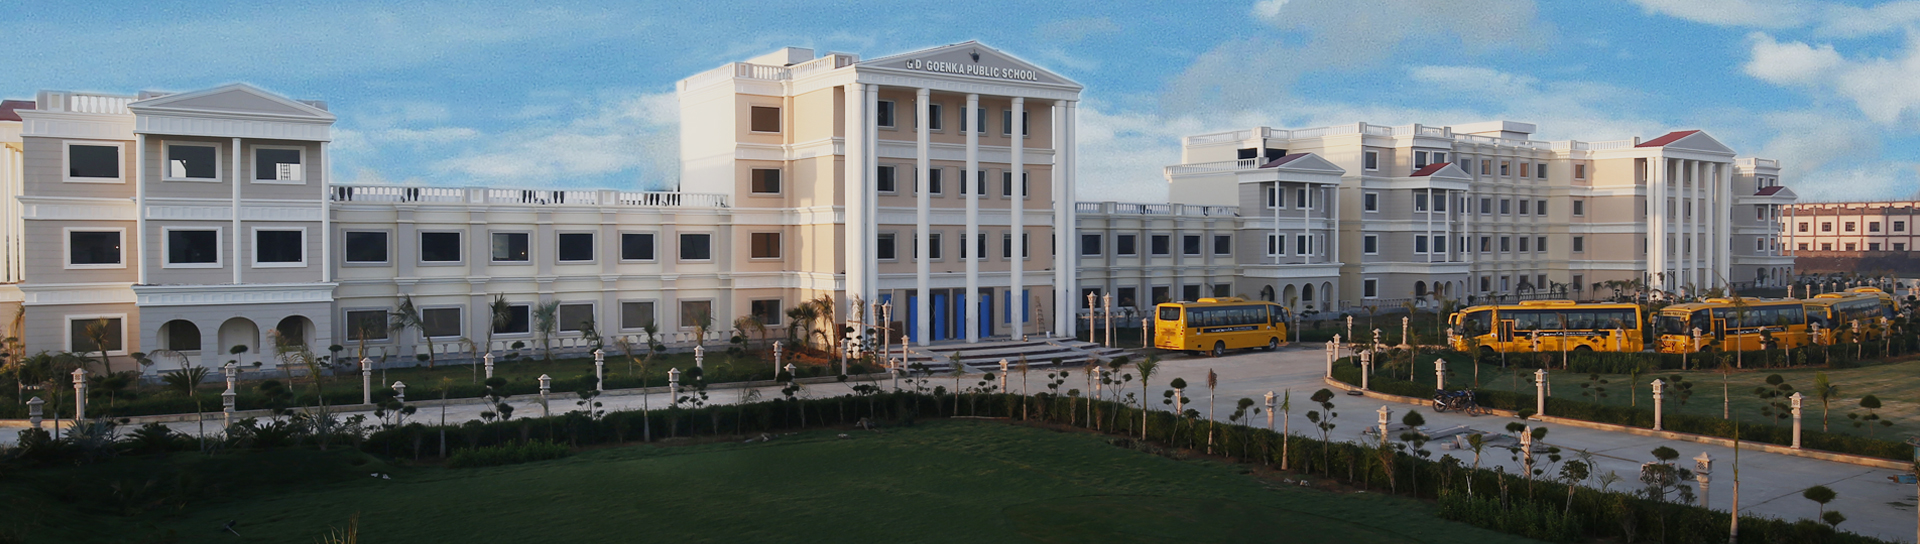 GD Goenka Public School - Jhajjar